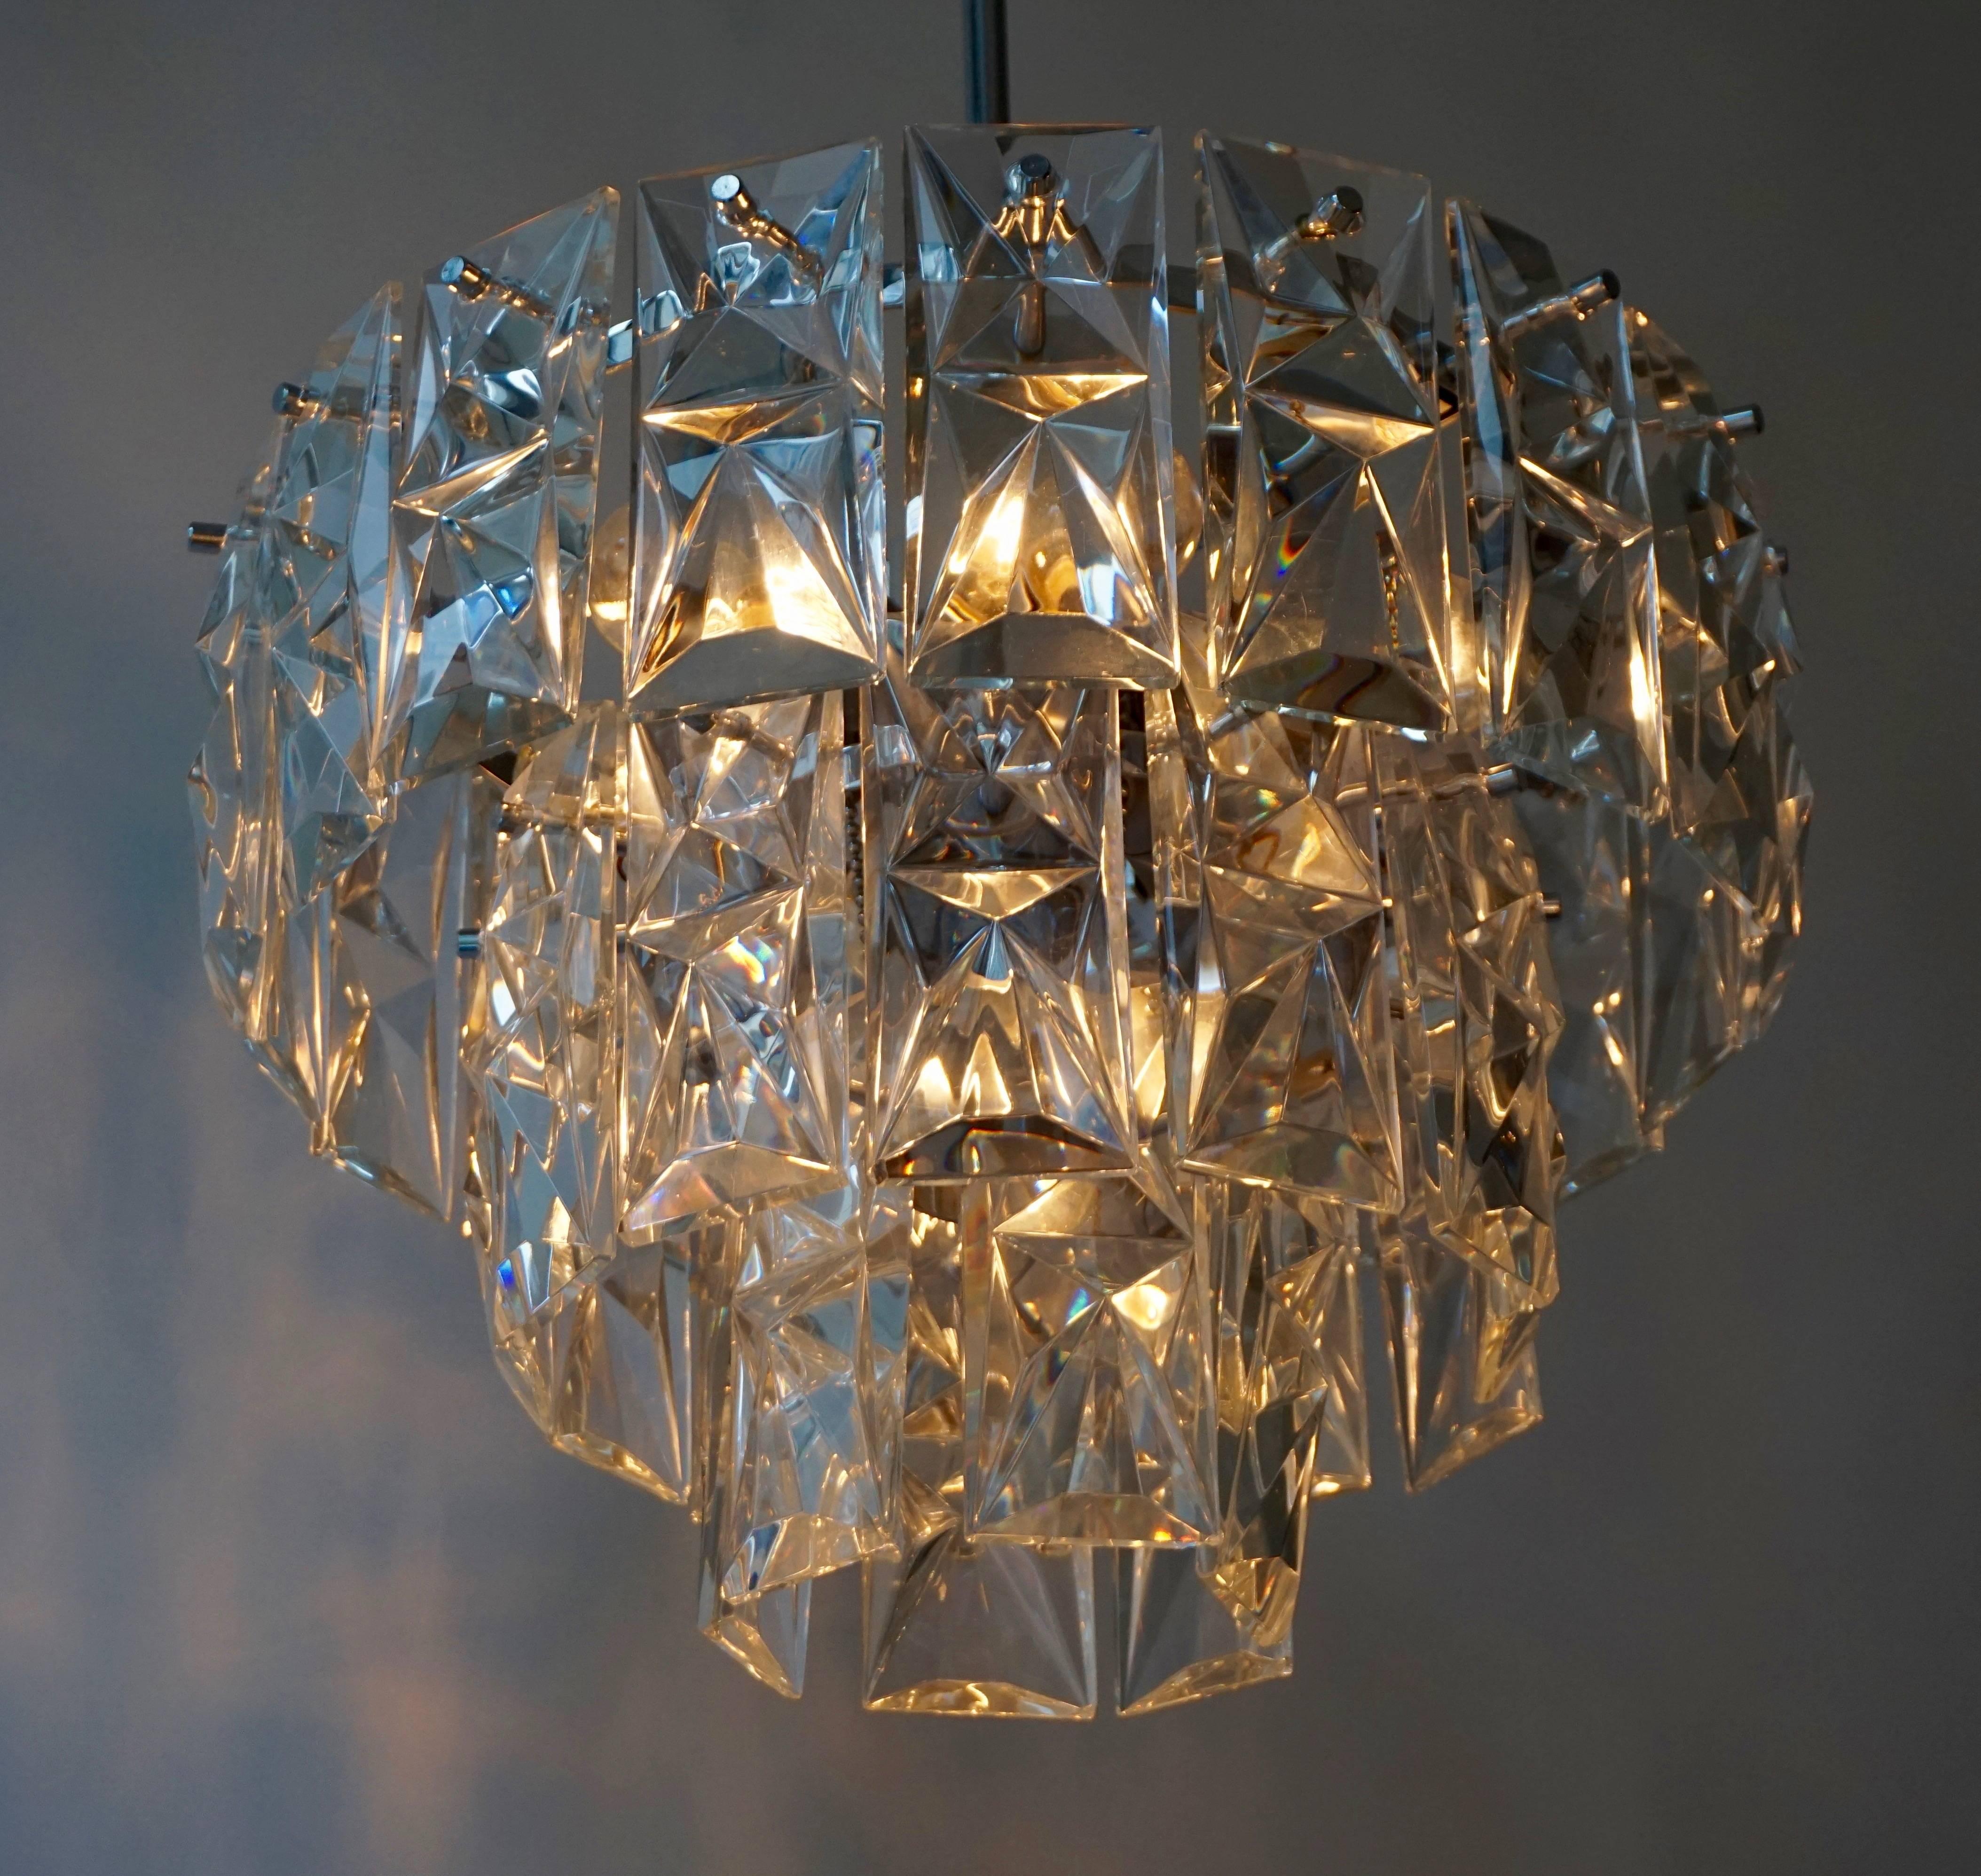 Italian Murano glass chandelier.
7 E14 bulbs.
Total height with rod is 70 cm.
Diameter 43 cm.
Height 30 cm.